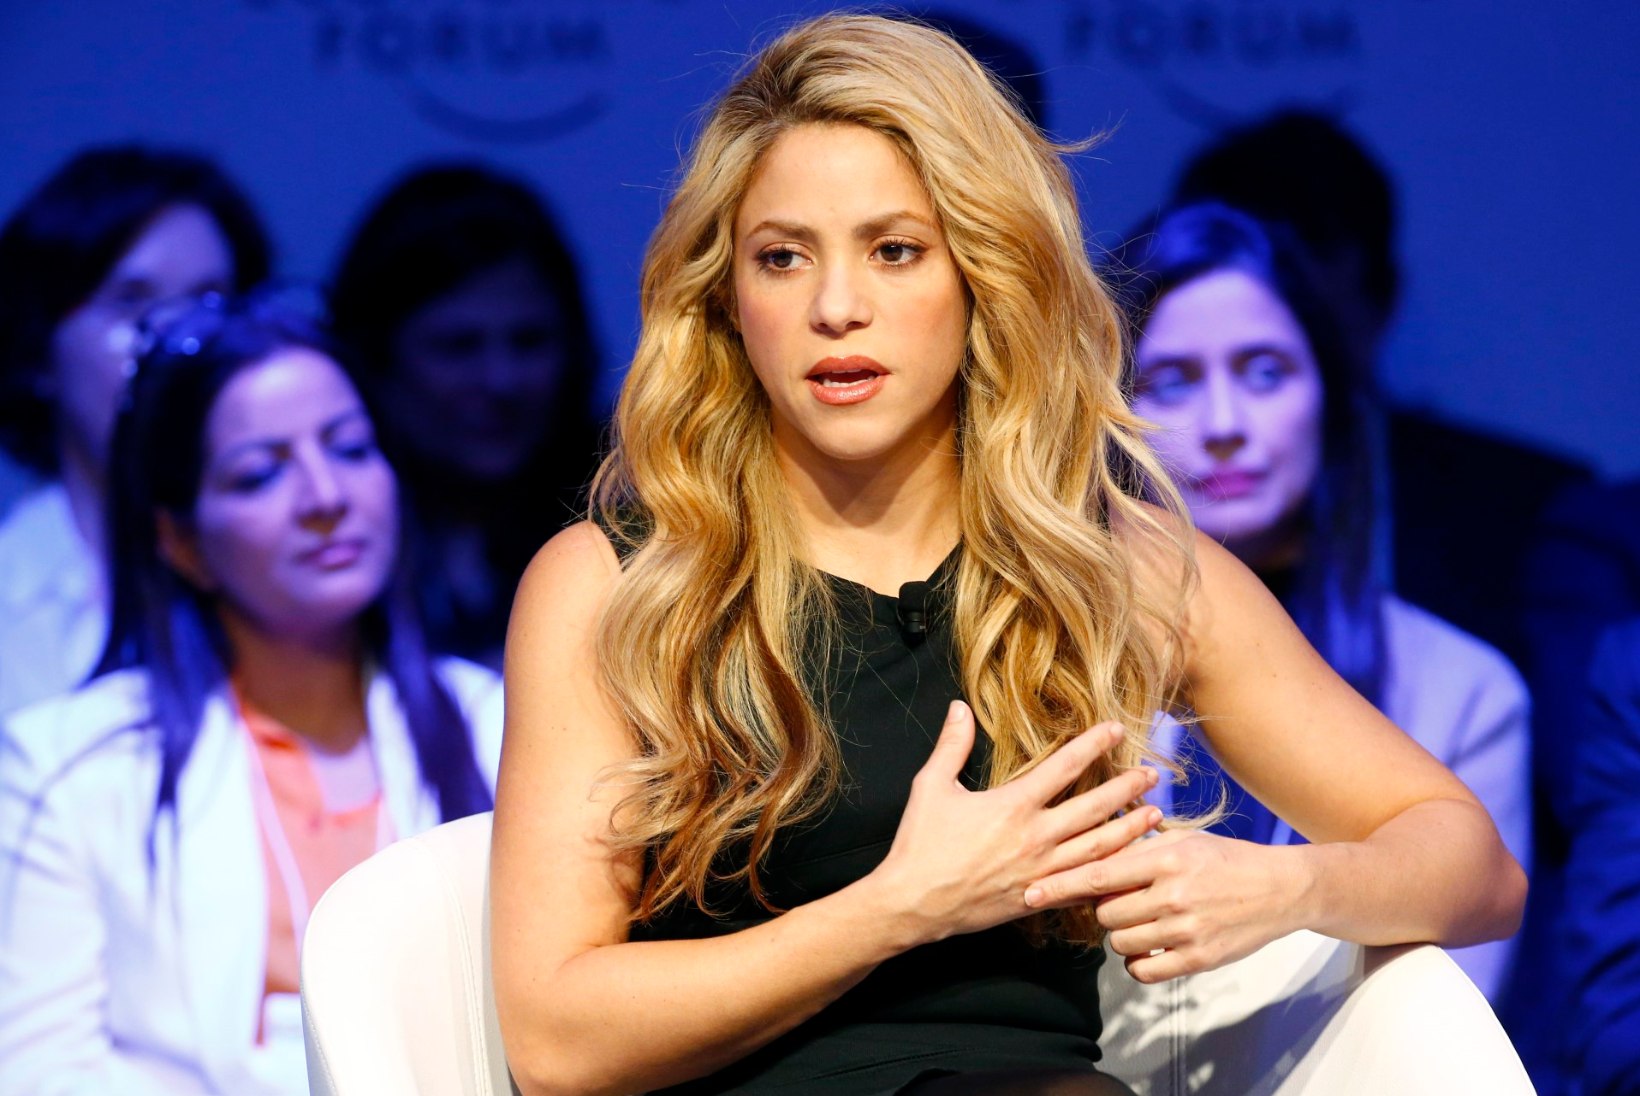 MUST MASENDUS: Shakira kartis, et ei laula enam iial